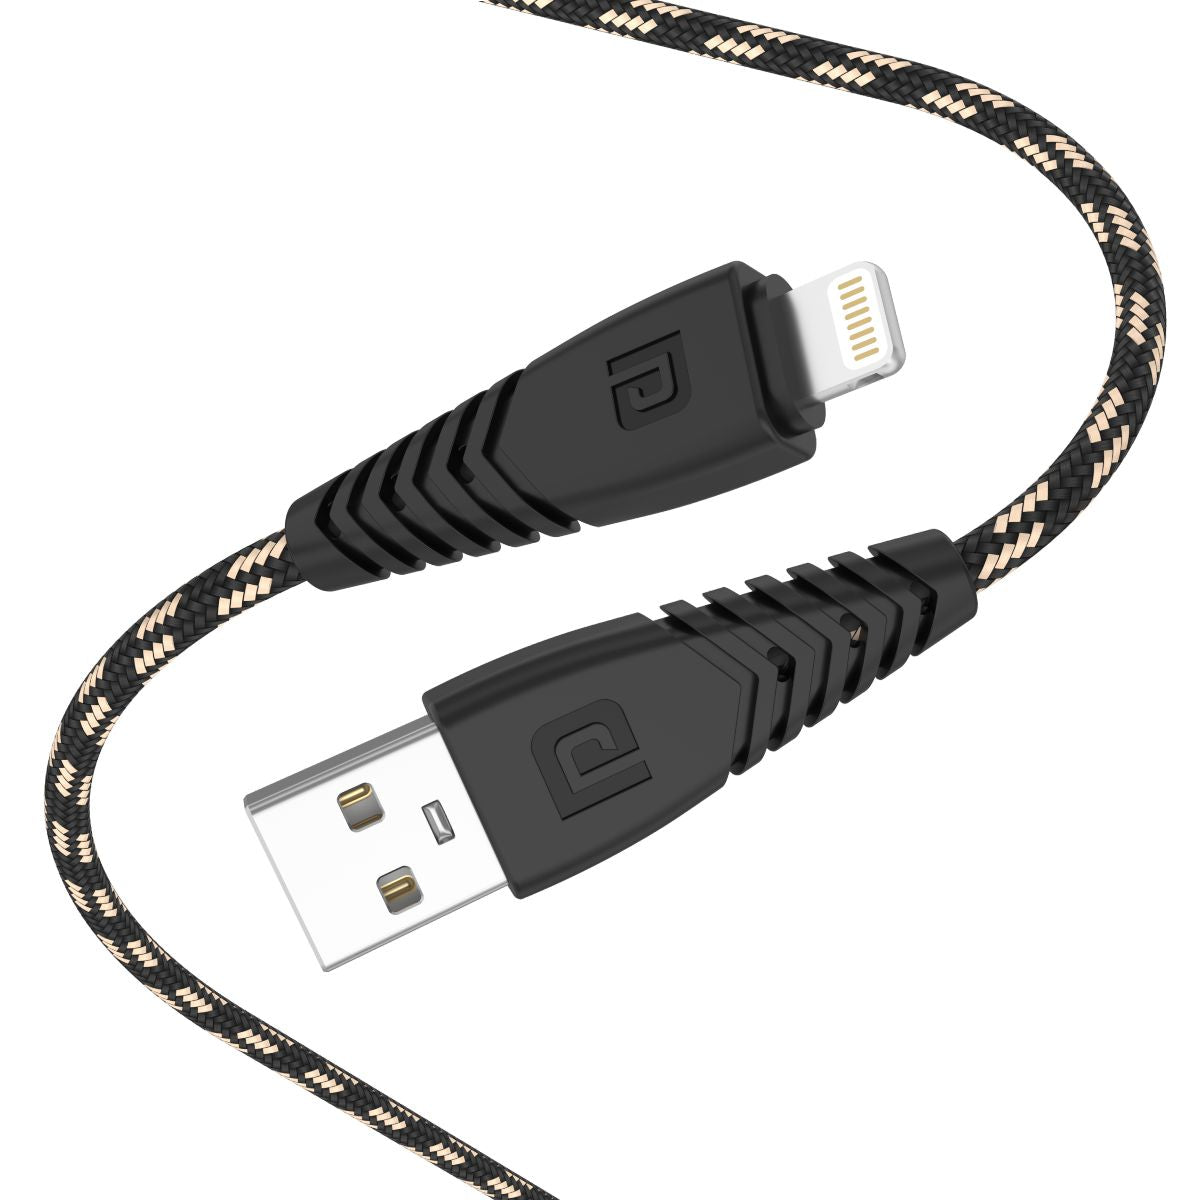 PORTRONICS-Konnect Spydr 8-Pin USB Cable